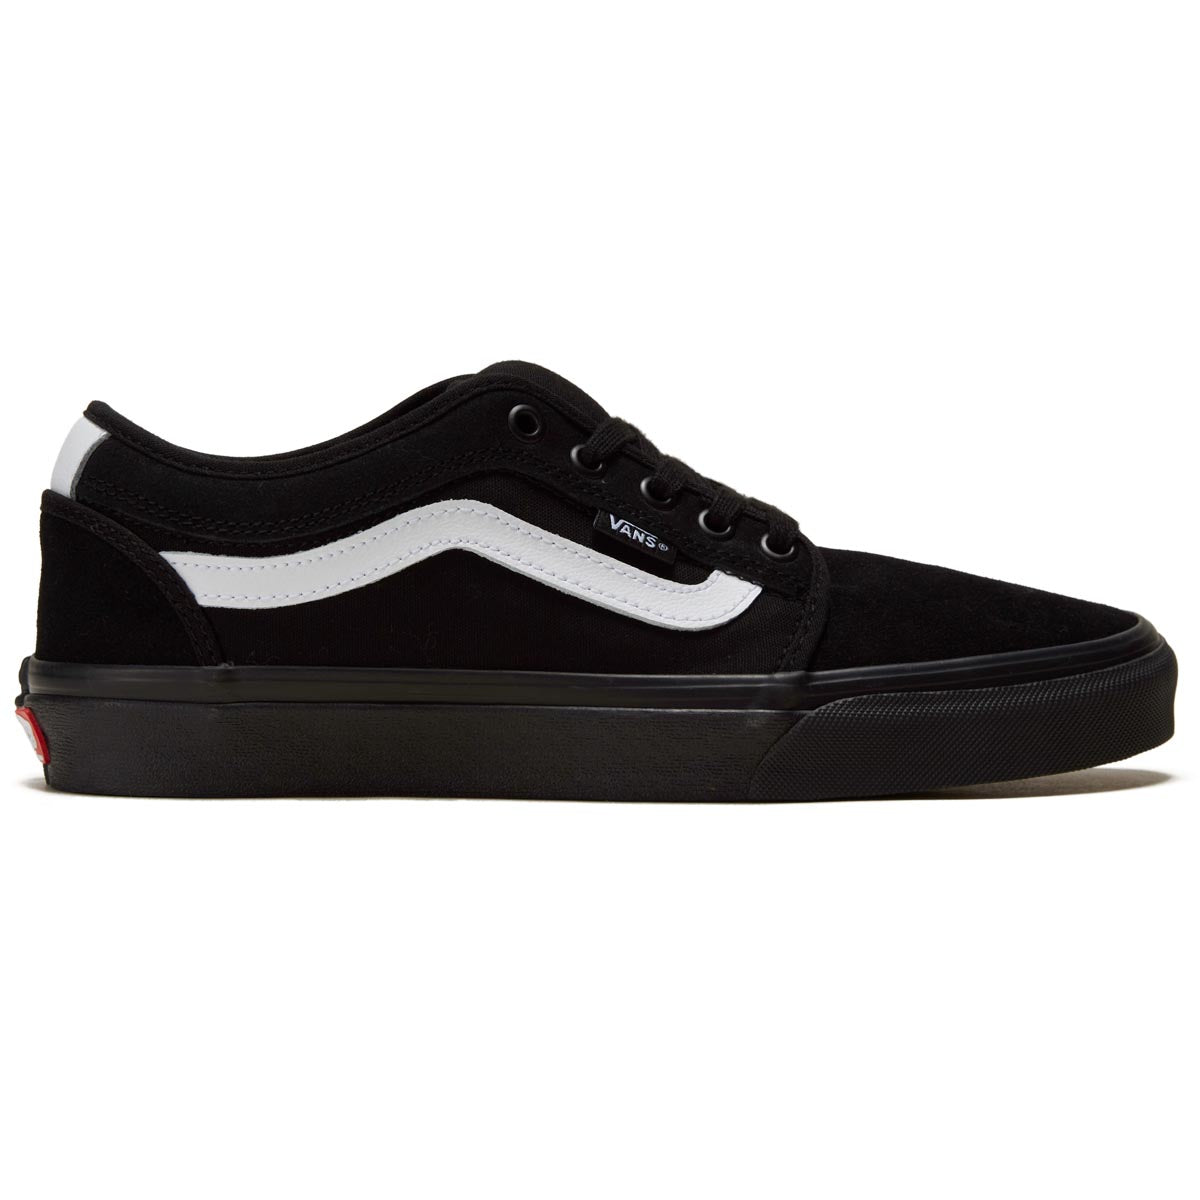 Vans Chukka Low Sidestripe Shoes - Black/Black/White image 1